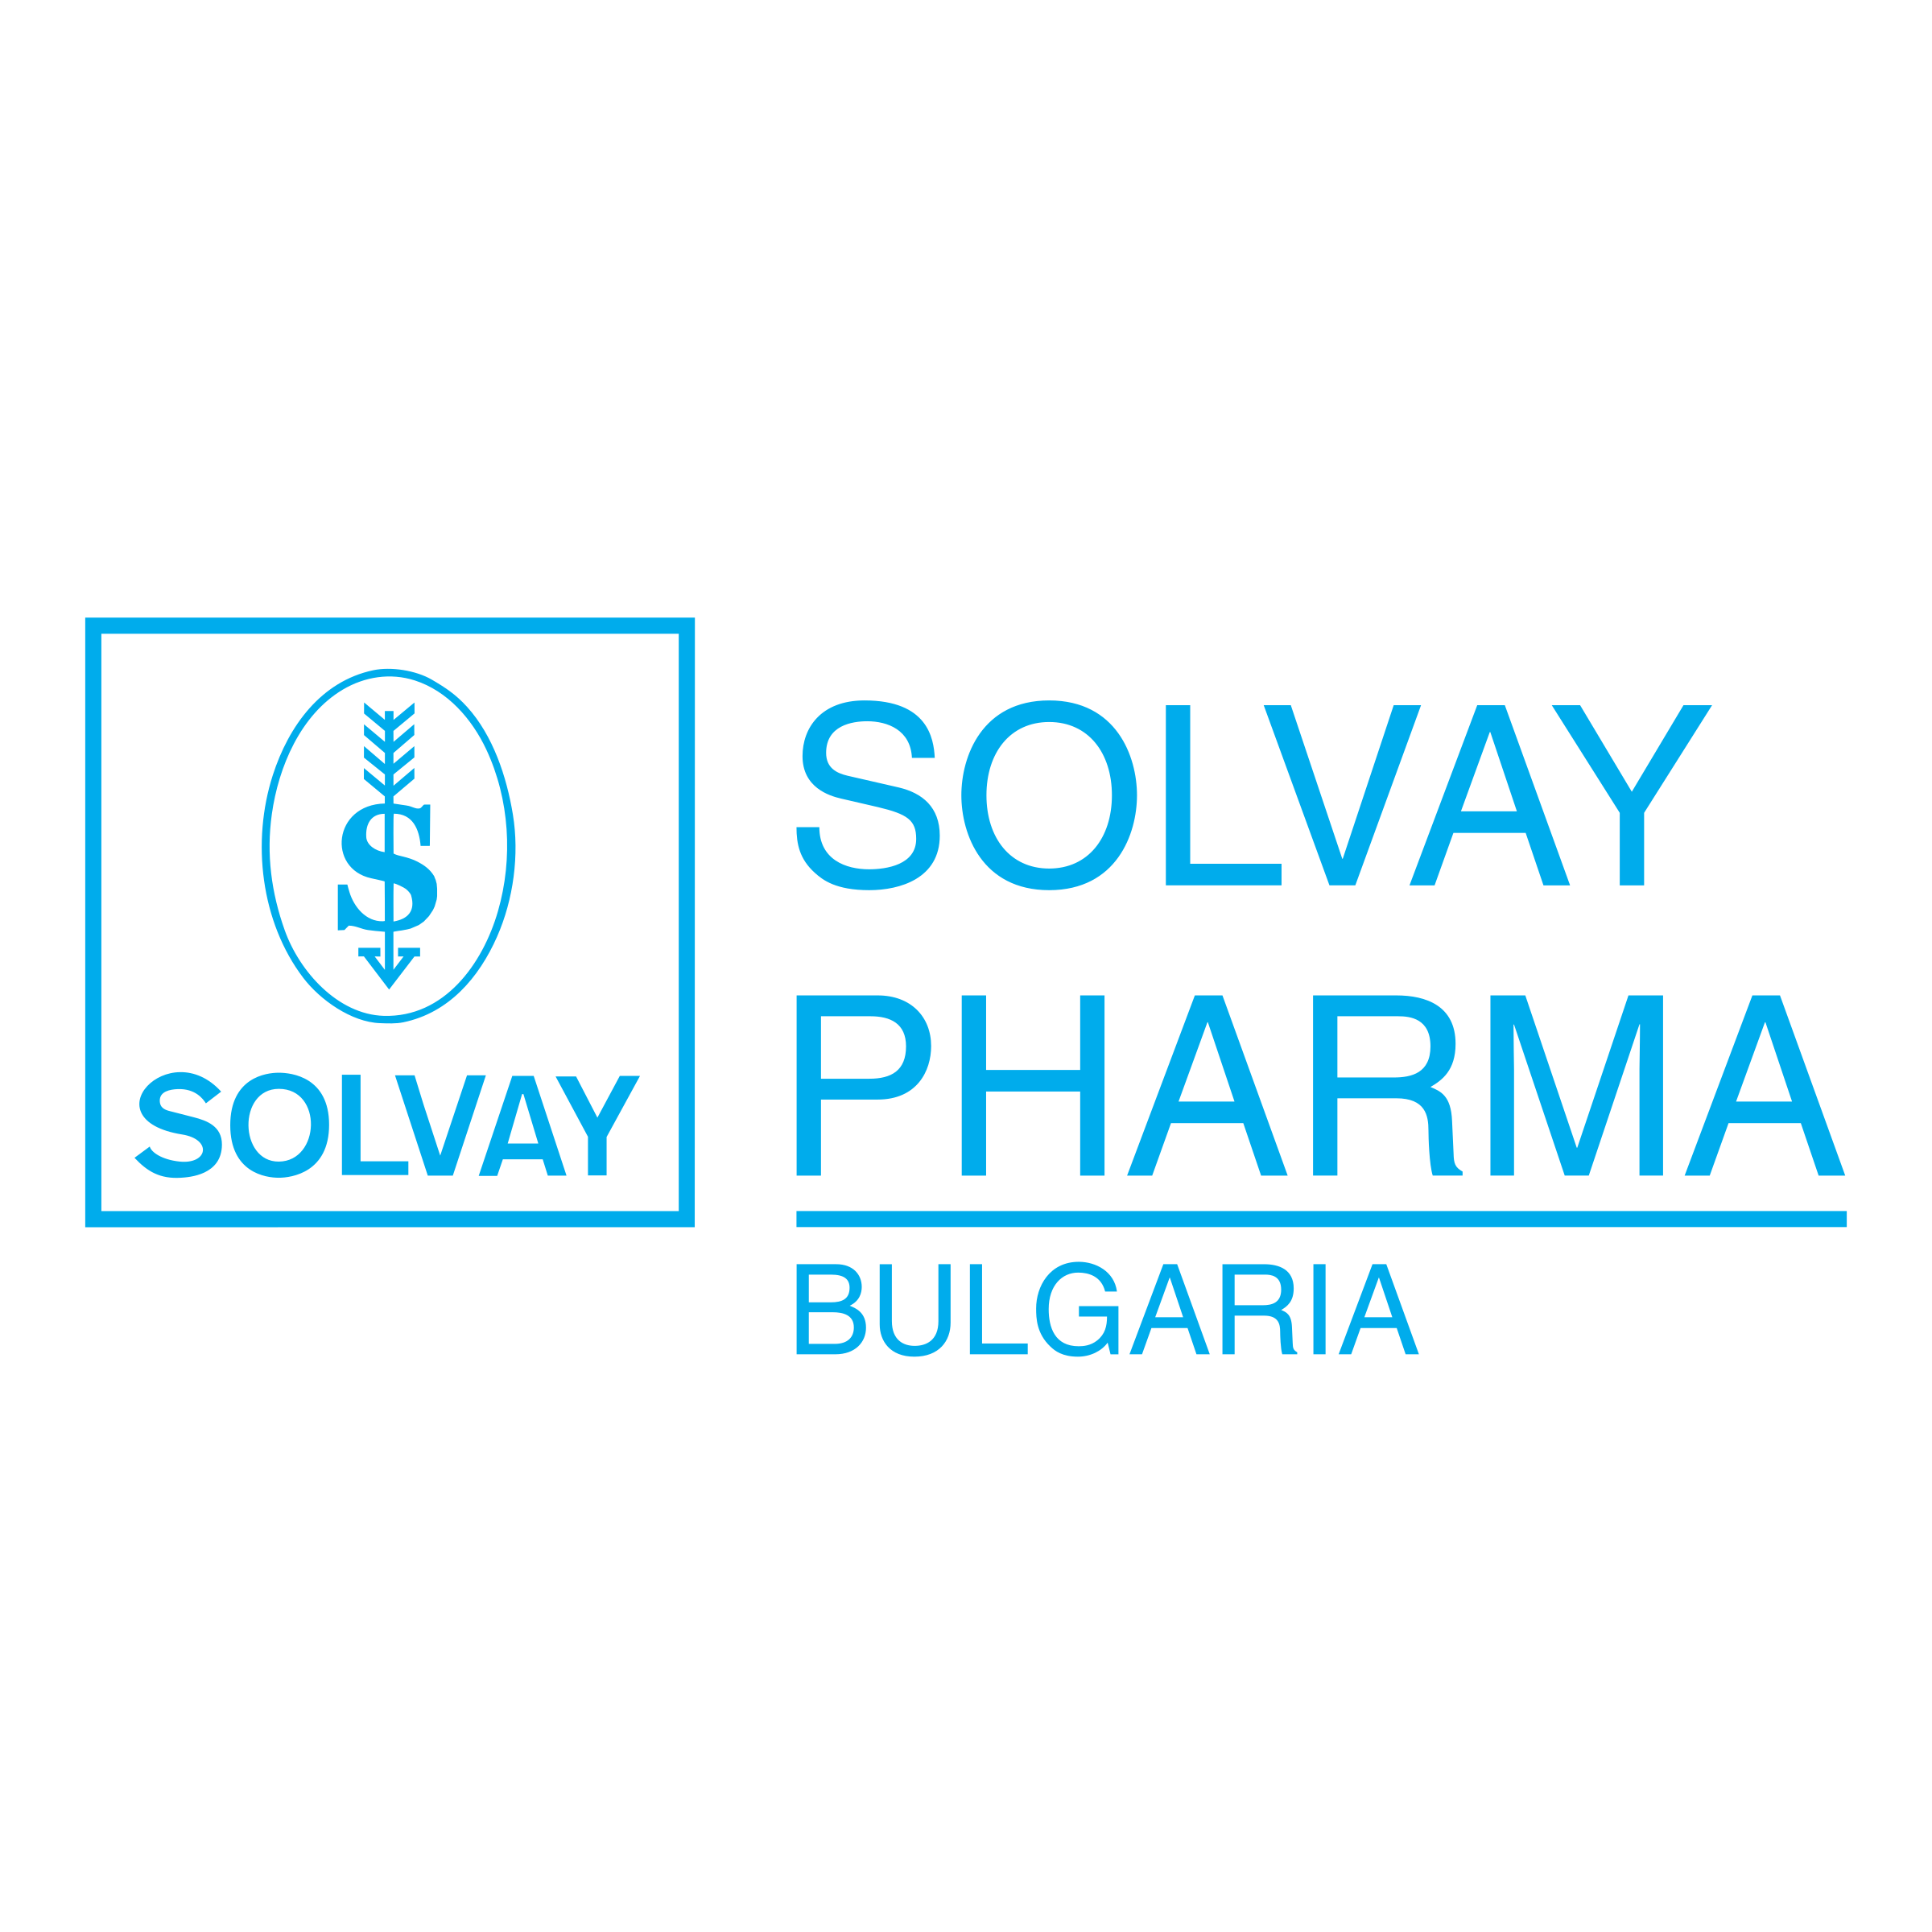 Solvay Logo - Solvay Pharma Bulgaria Logo PNG Transparent & SVG Vector - Freebie ...